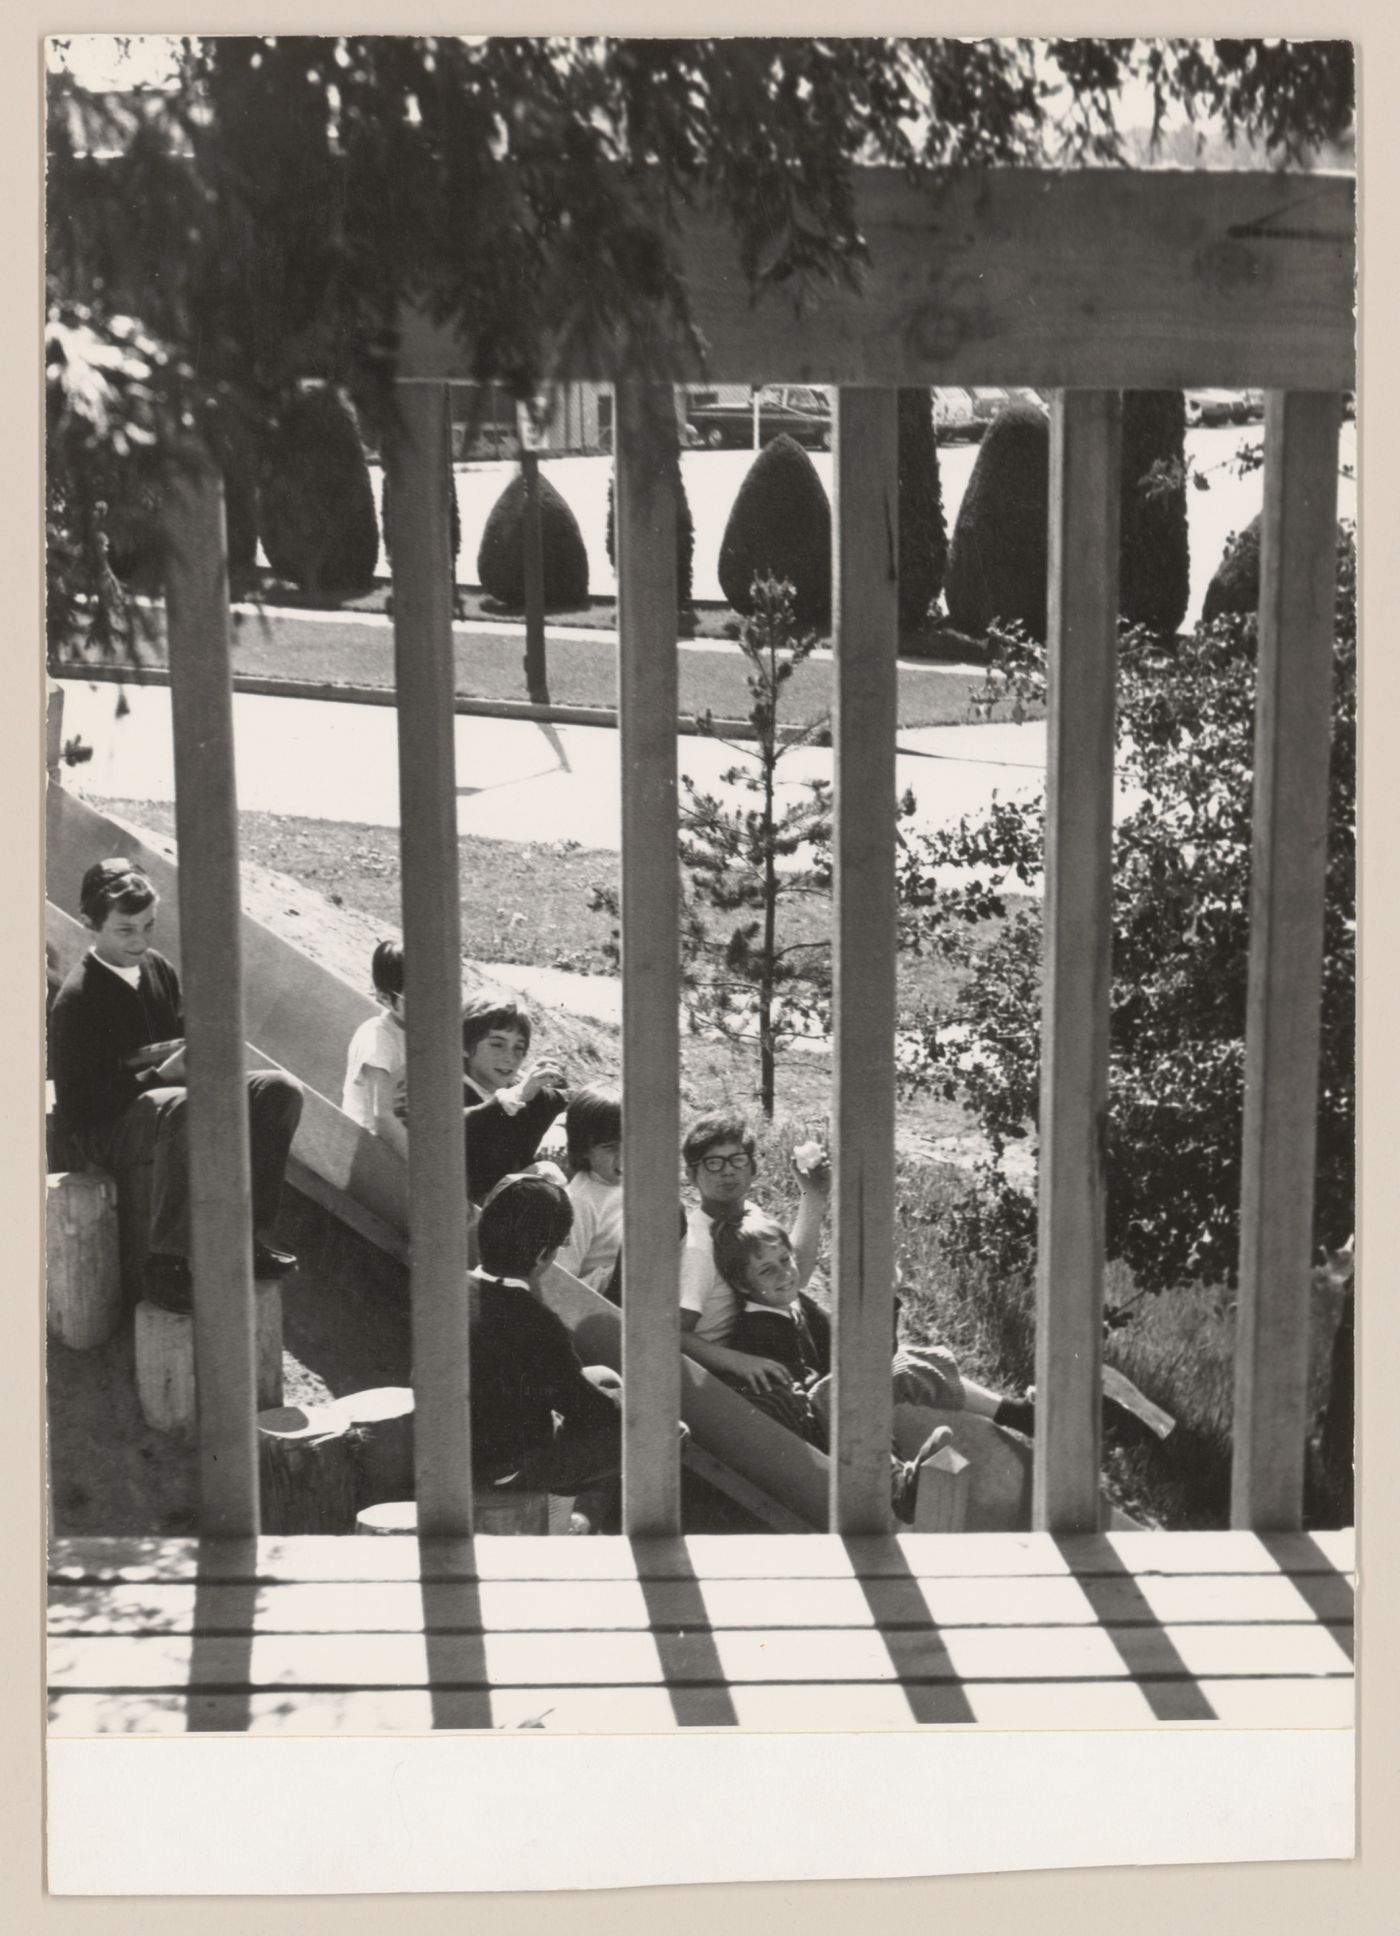 View of children in Talmud Torah School Playground, Vancouver, British Columbia